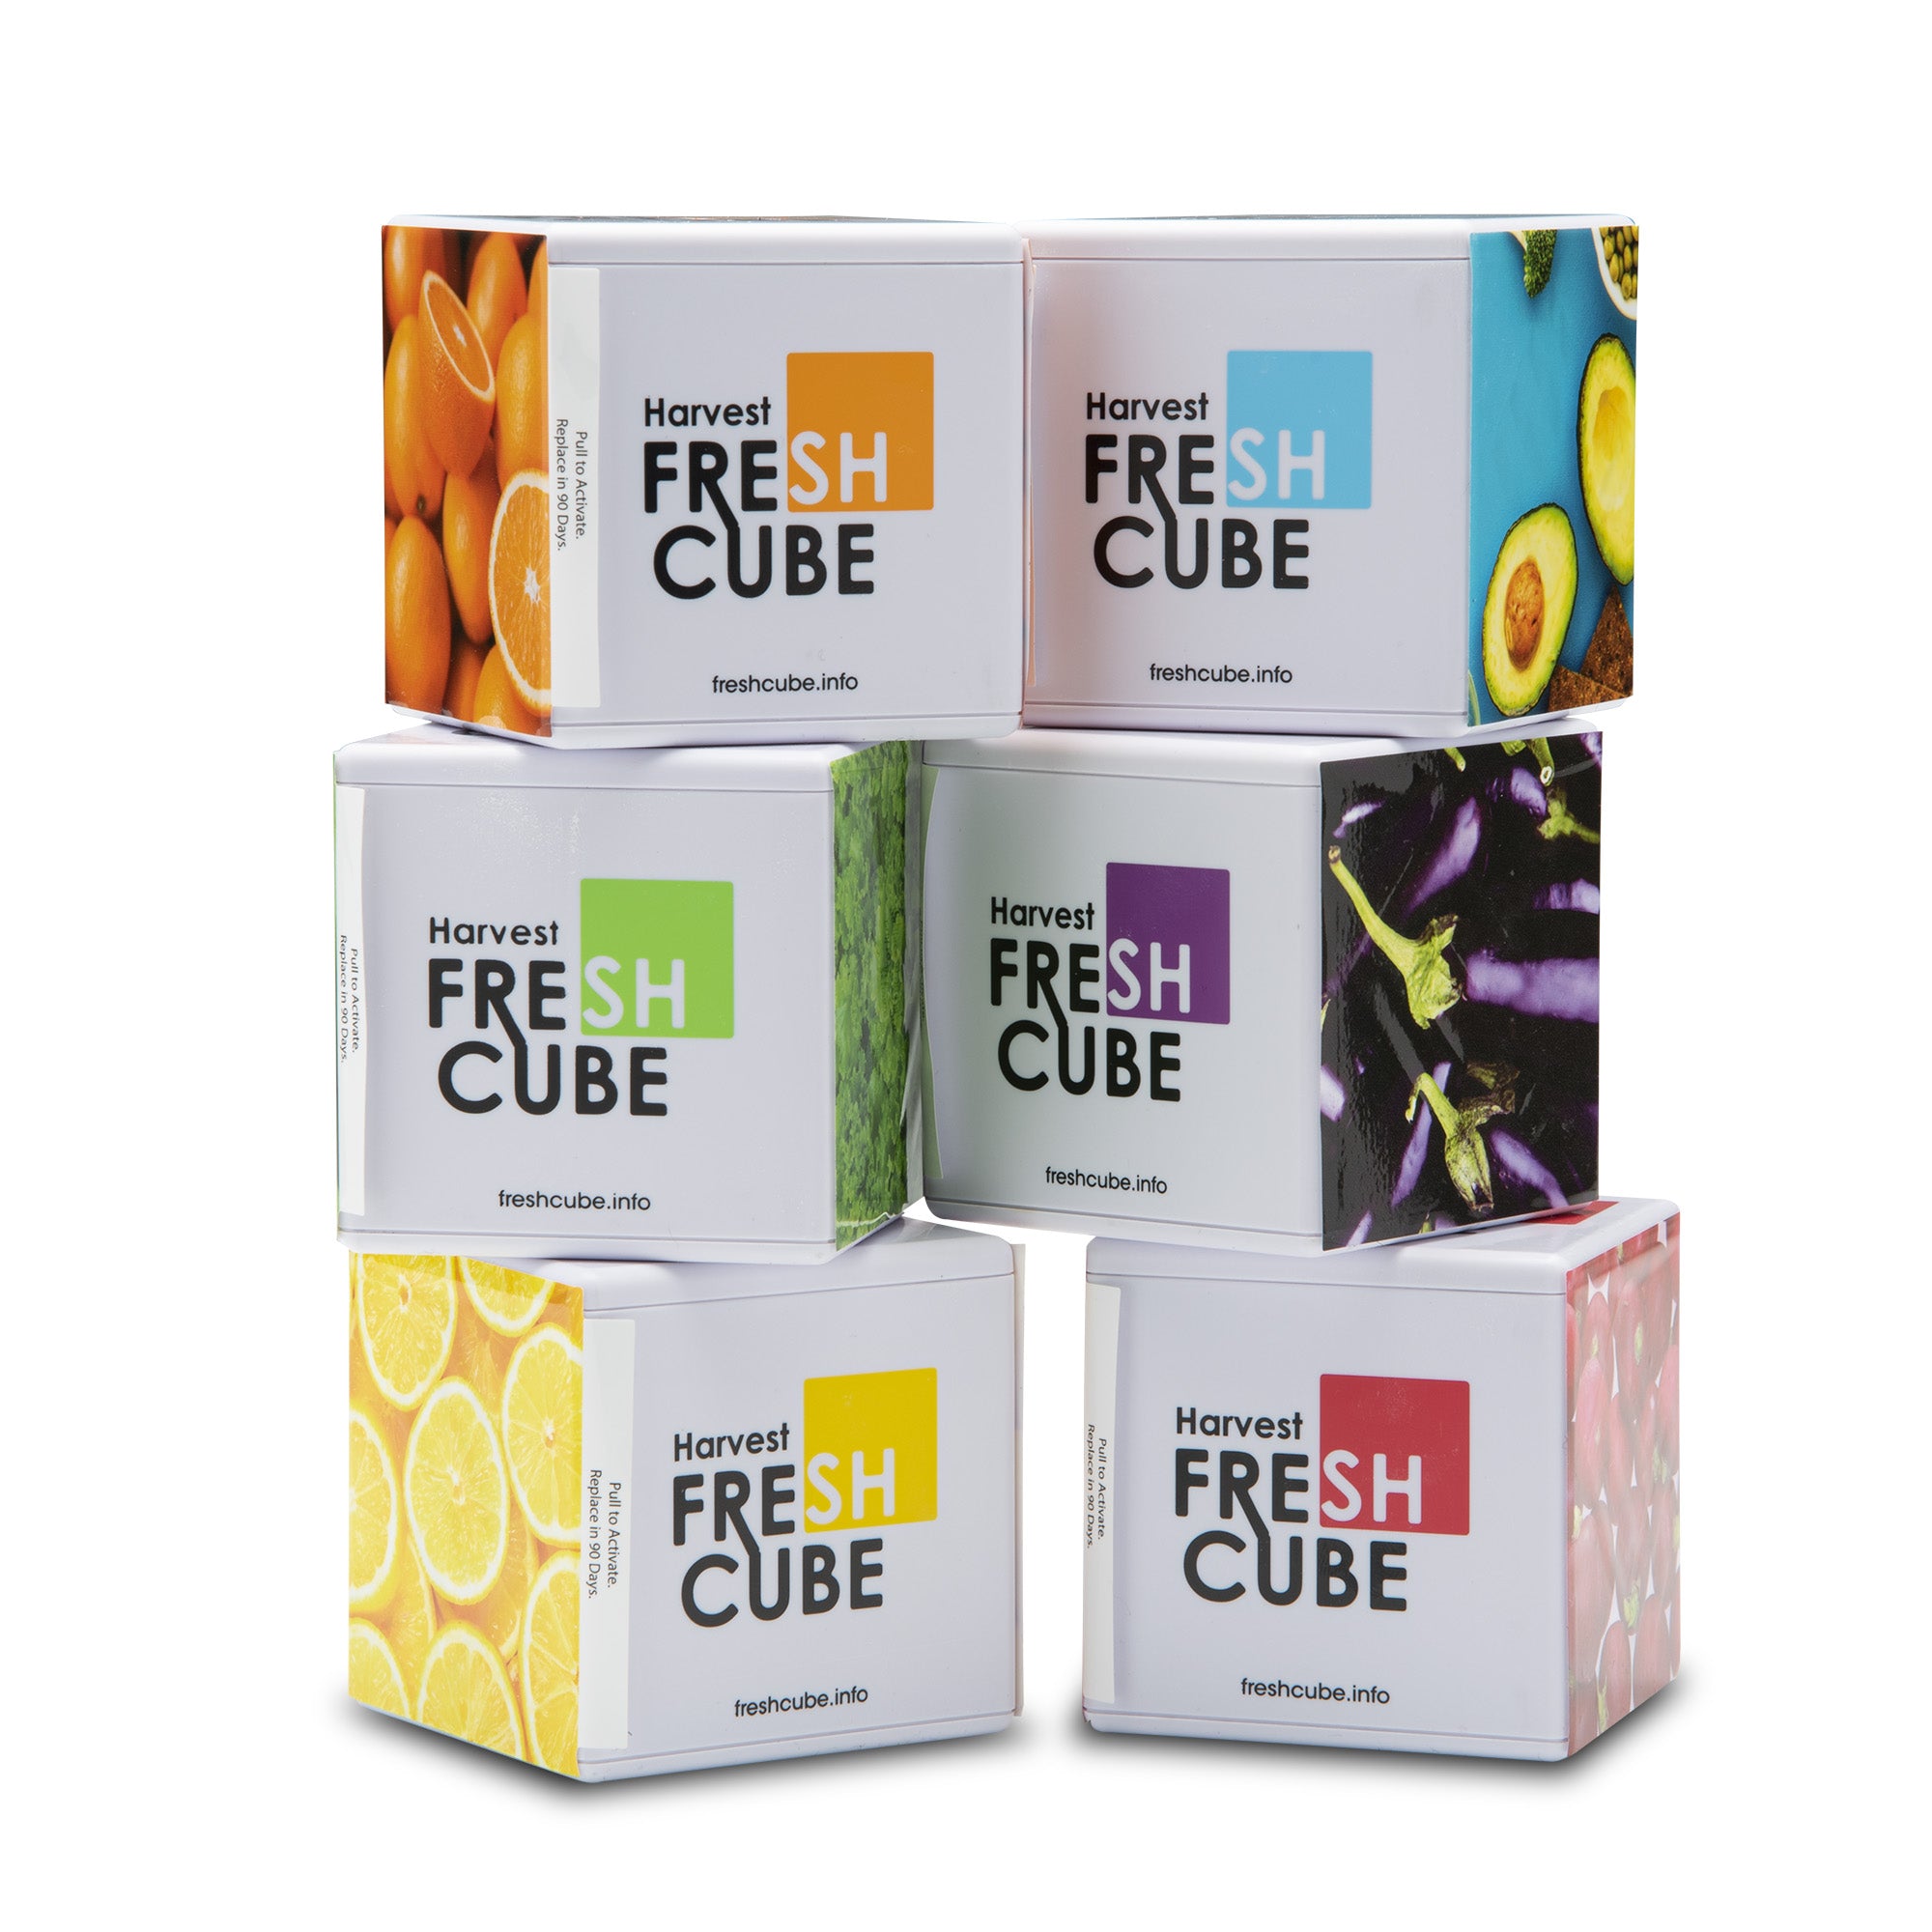 (6 months supply) Harvest Fresh Cube